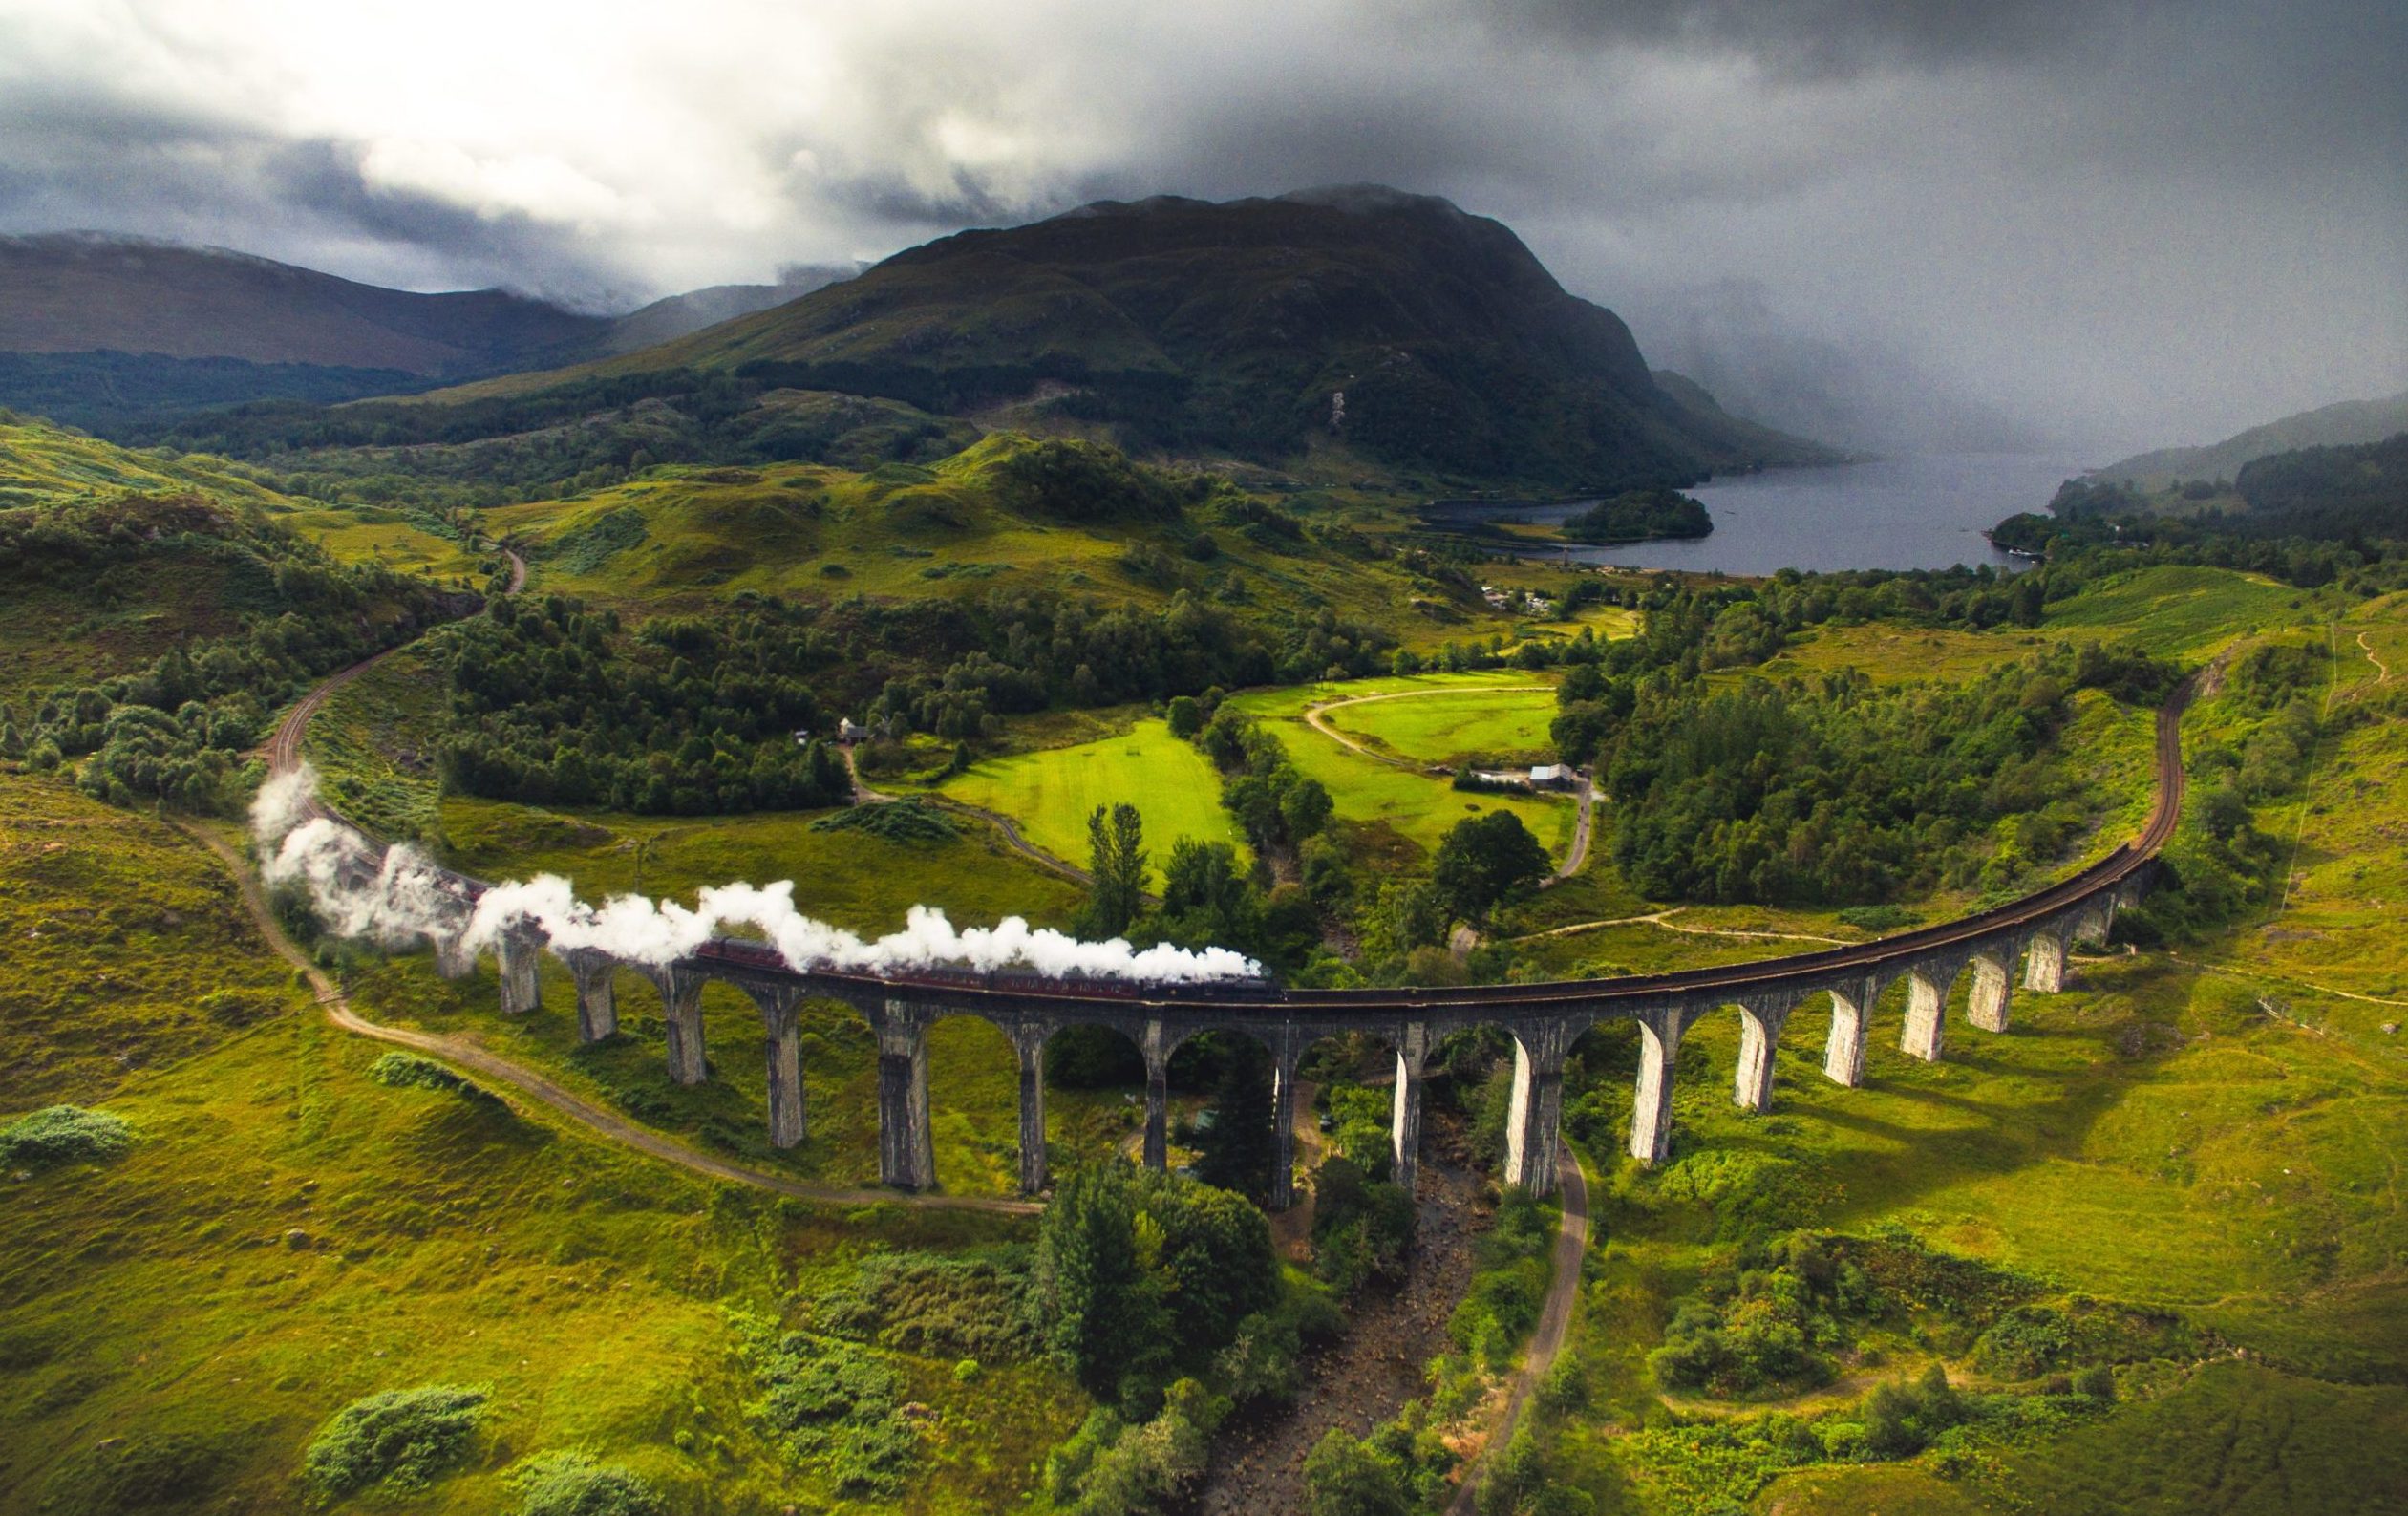 A steam train crosses the famous Glenfinnan Viaduct